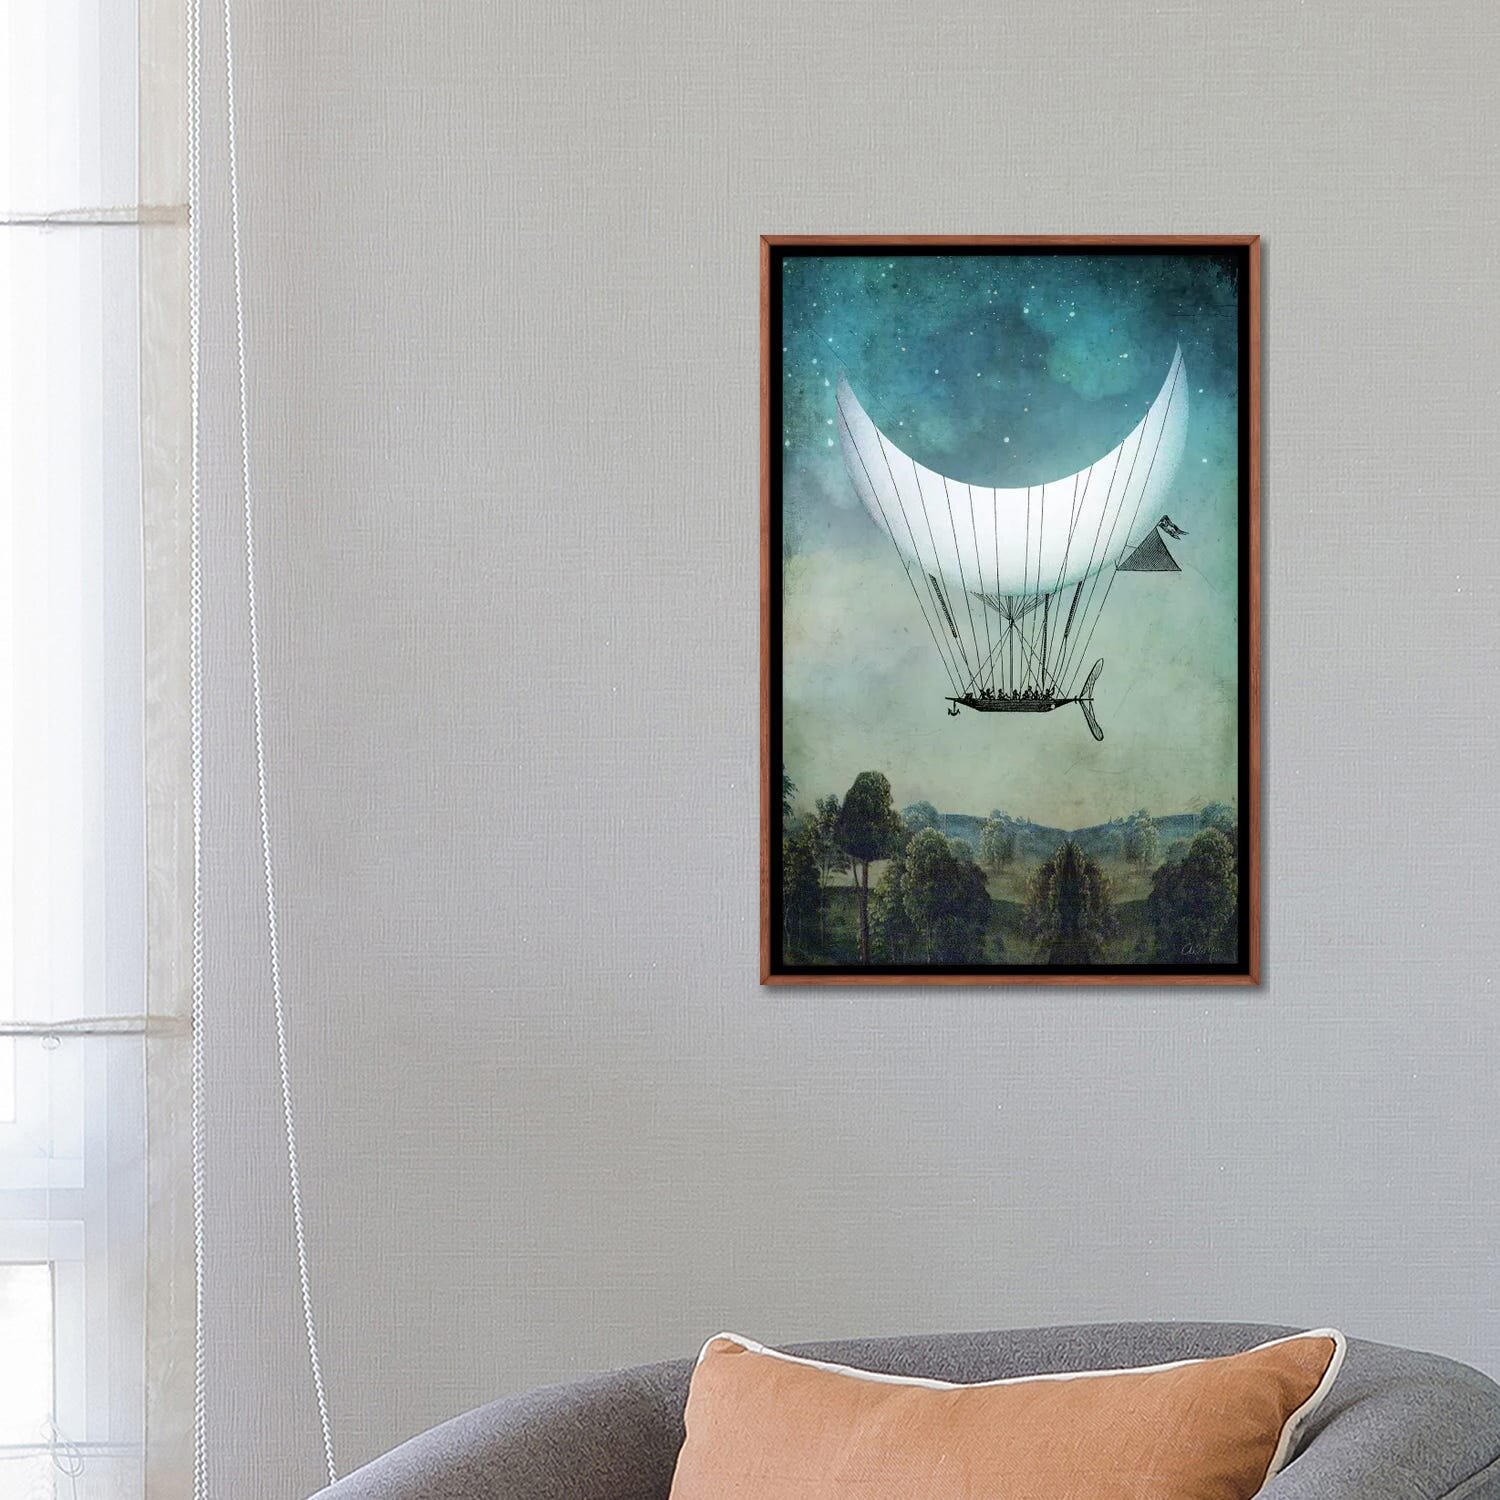 Bless international The Moonship Framed by Catrin Welz-Stein Print Wayfair